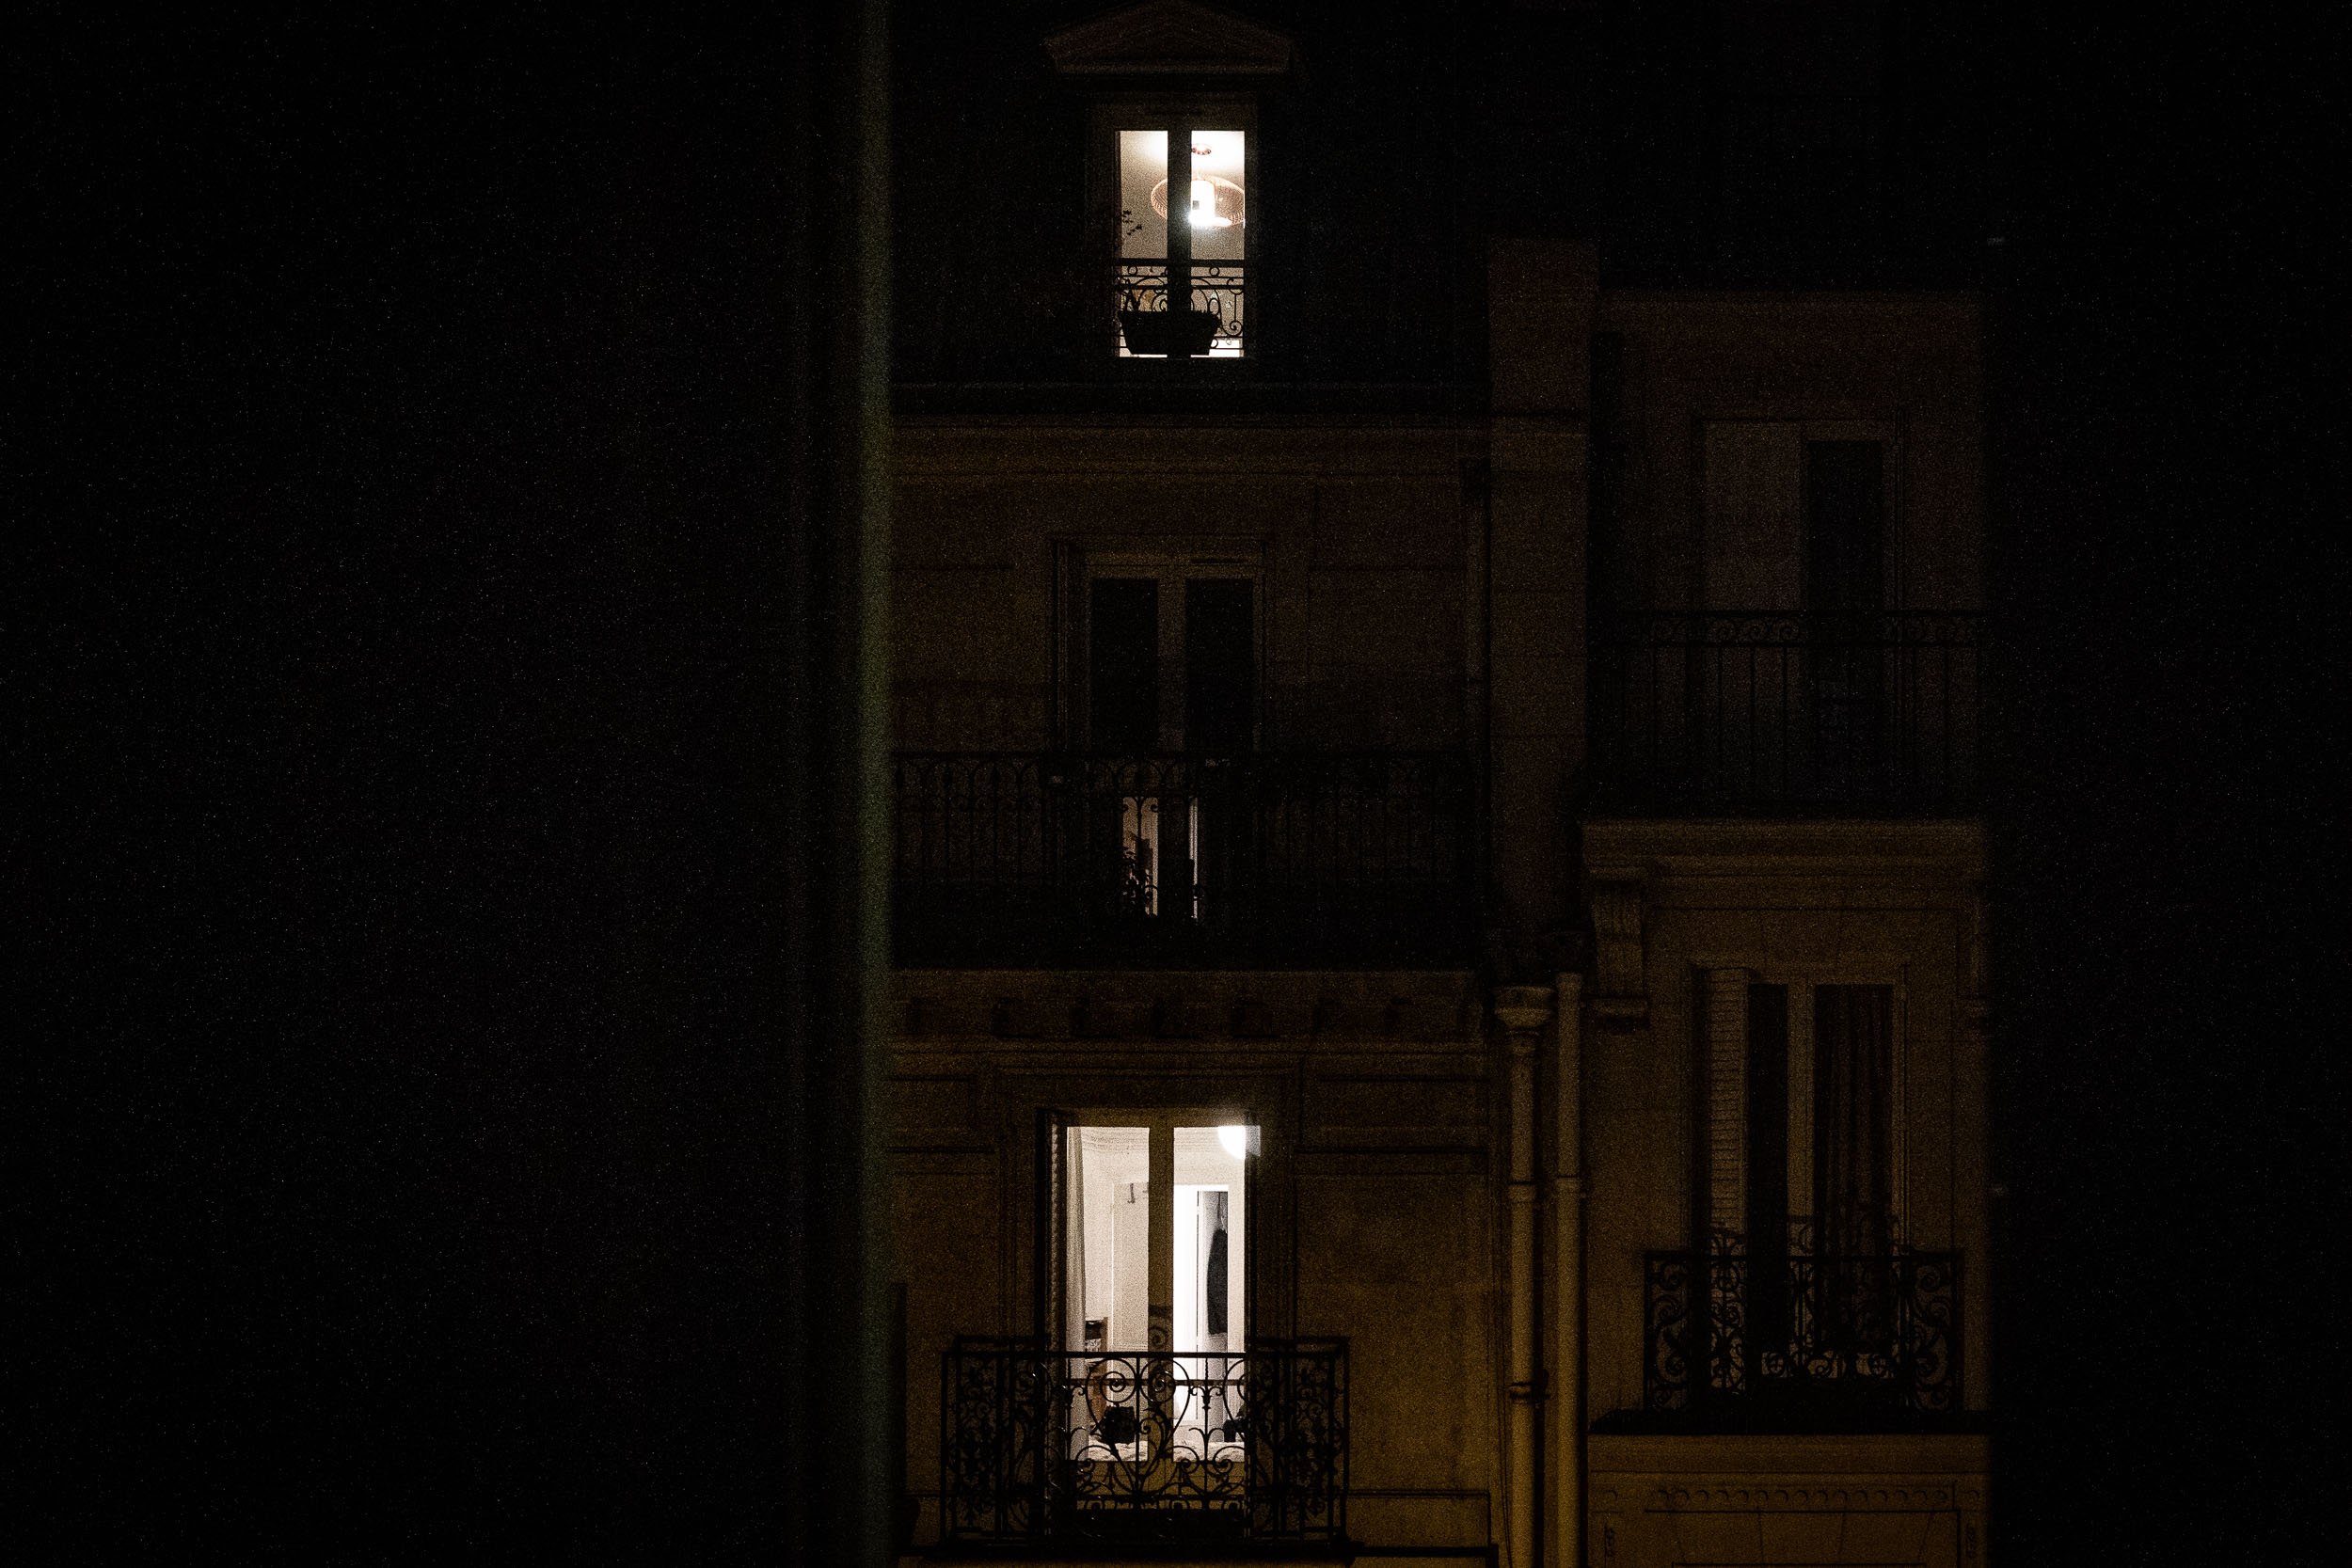 059-view-from-living-room-window-paris.jpg